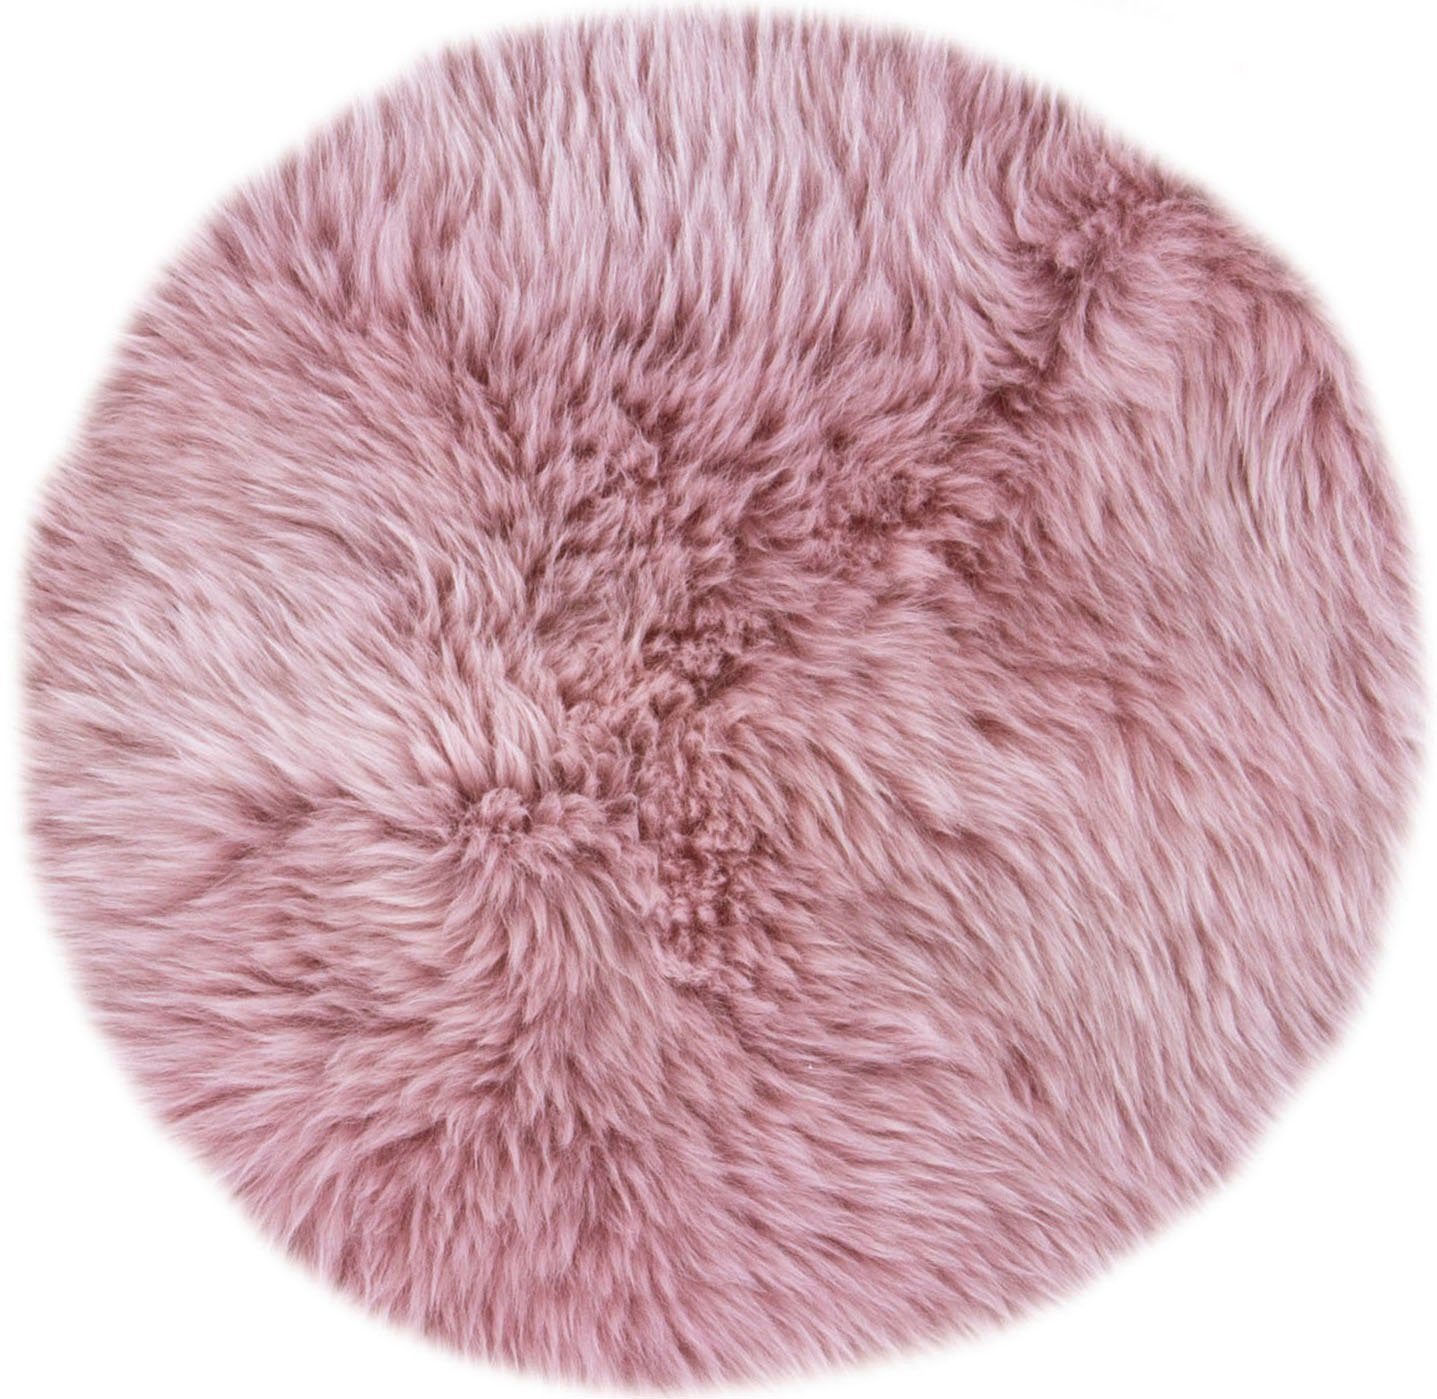 LUXOR rosa echtes Stuhlkissen Lammfell, rund, cm, Sitzauflage, living Sitzfell, Ø 34 Lammfell